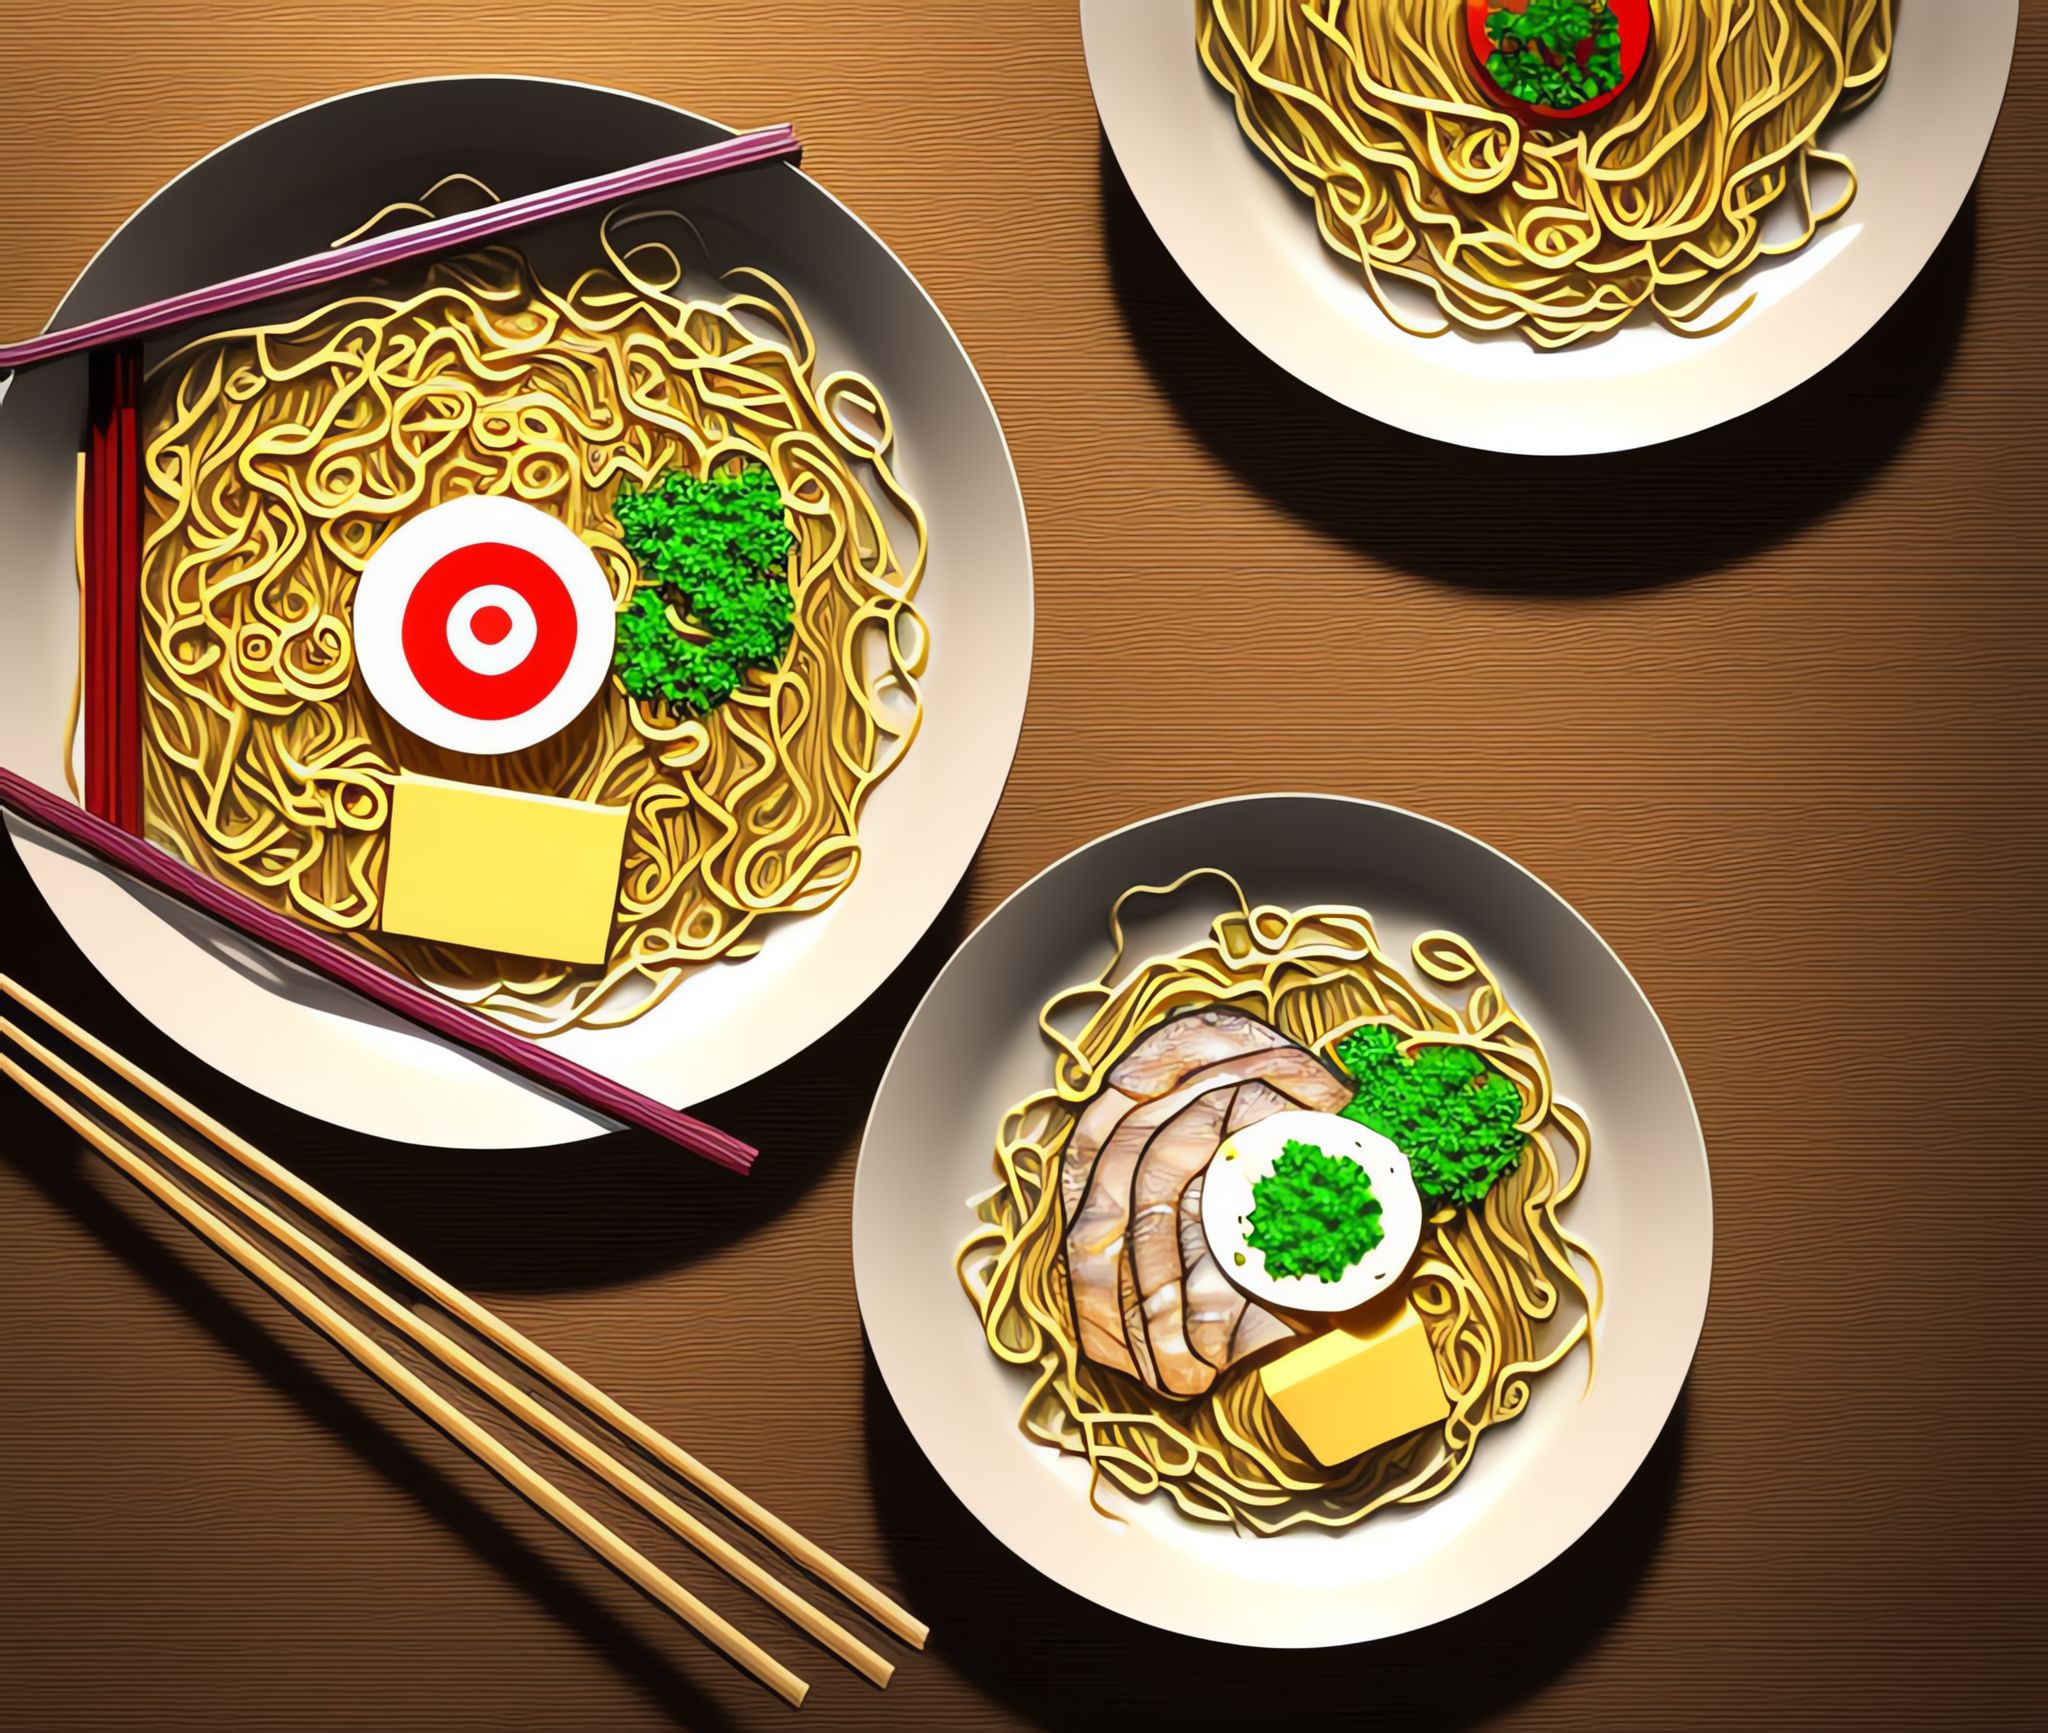 Butter-ramen-art-work-cgi-art-Japanese-food-delicious-restaurant-cooking-manga-8h0x